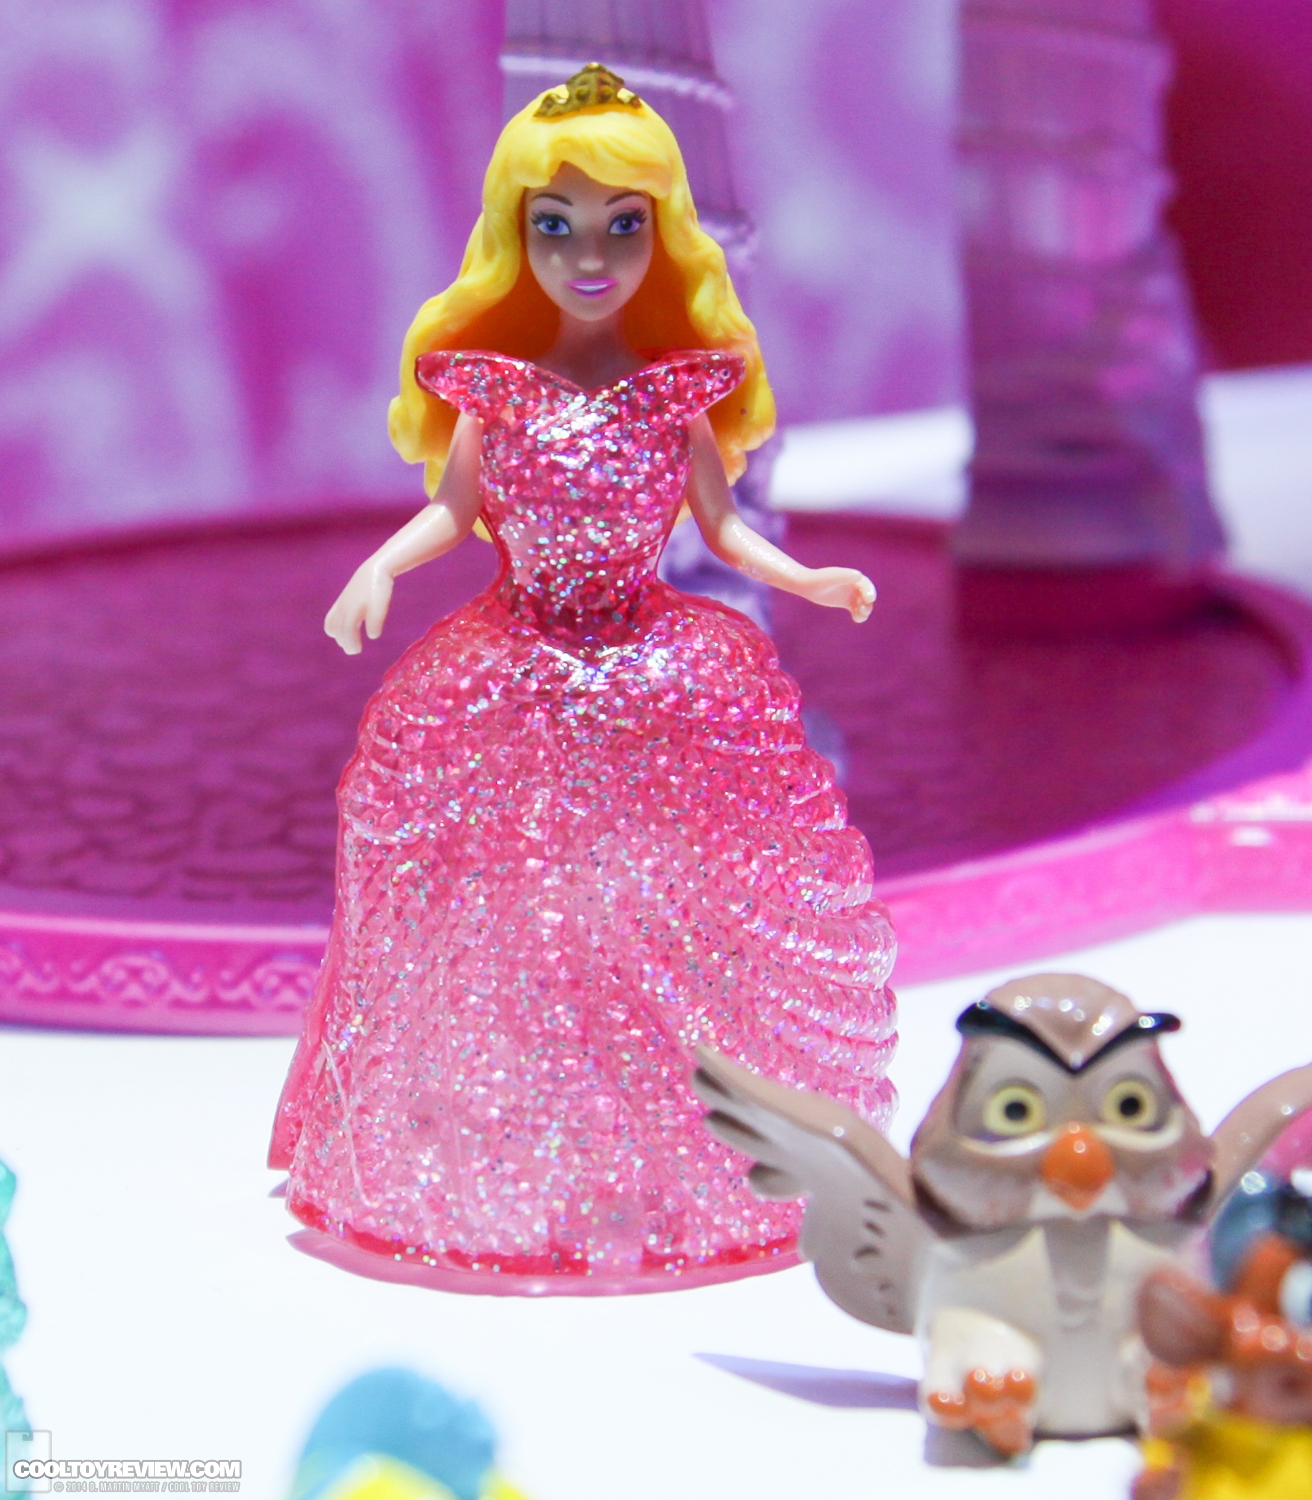 Toy-Fair-2014-Mattel-Showroom-289.jpg